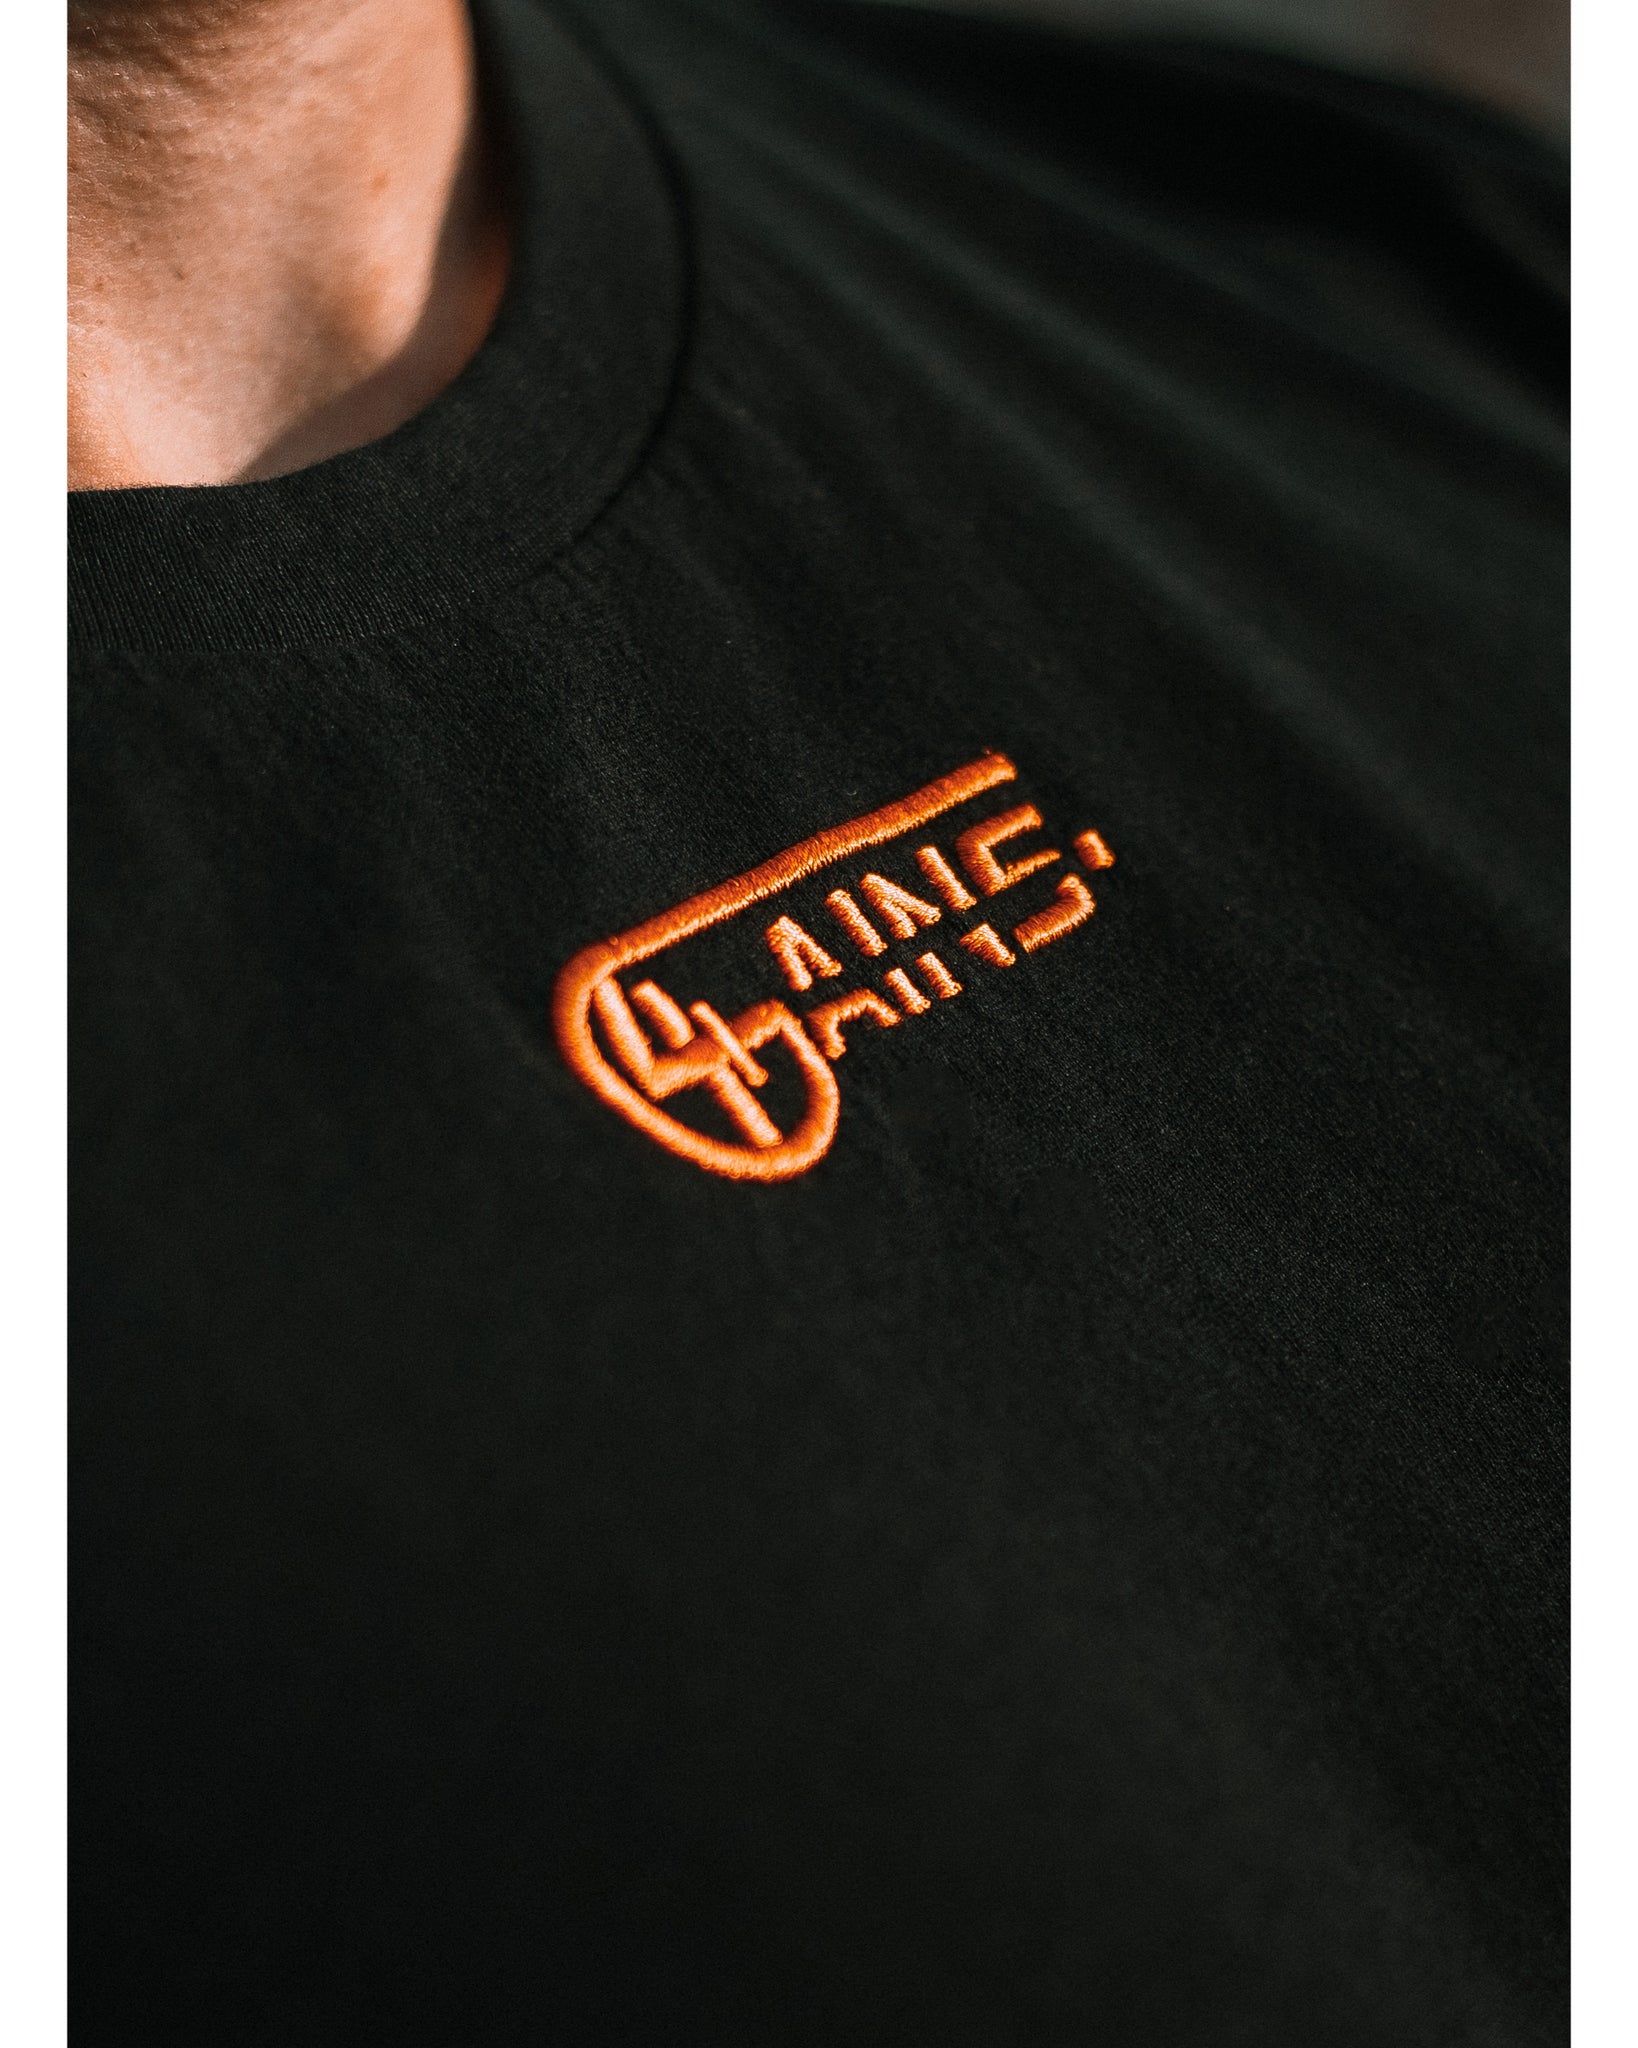 4GAINS basic unisex T-Shirt in black/orange